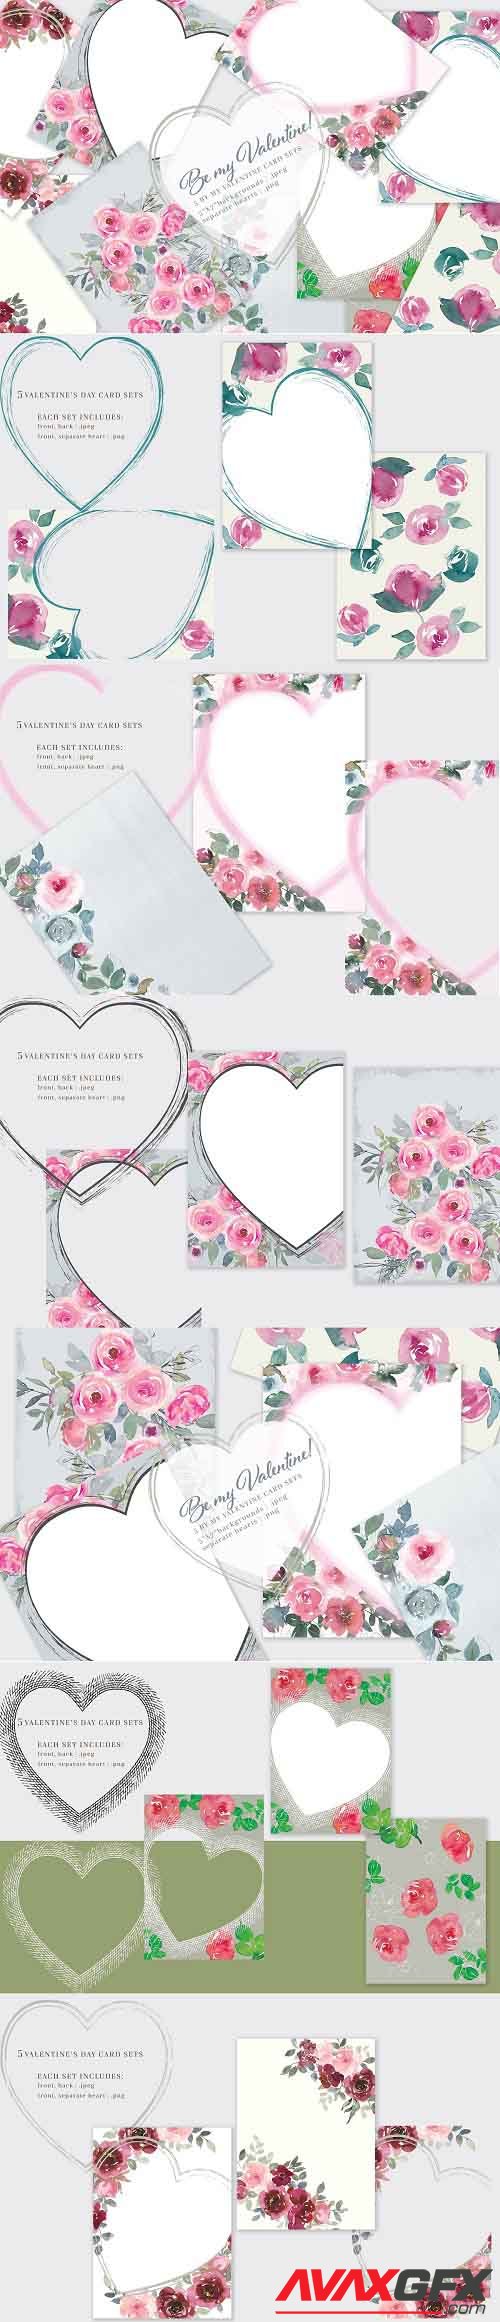 Be My Valentine Printable Cards 5x7  - 5778280